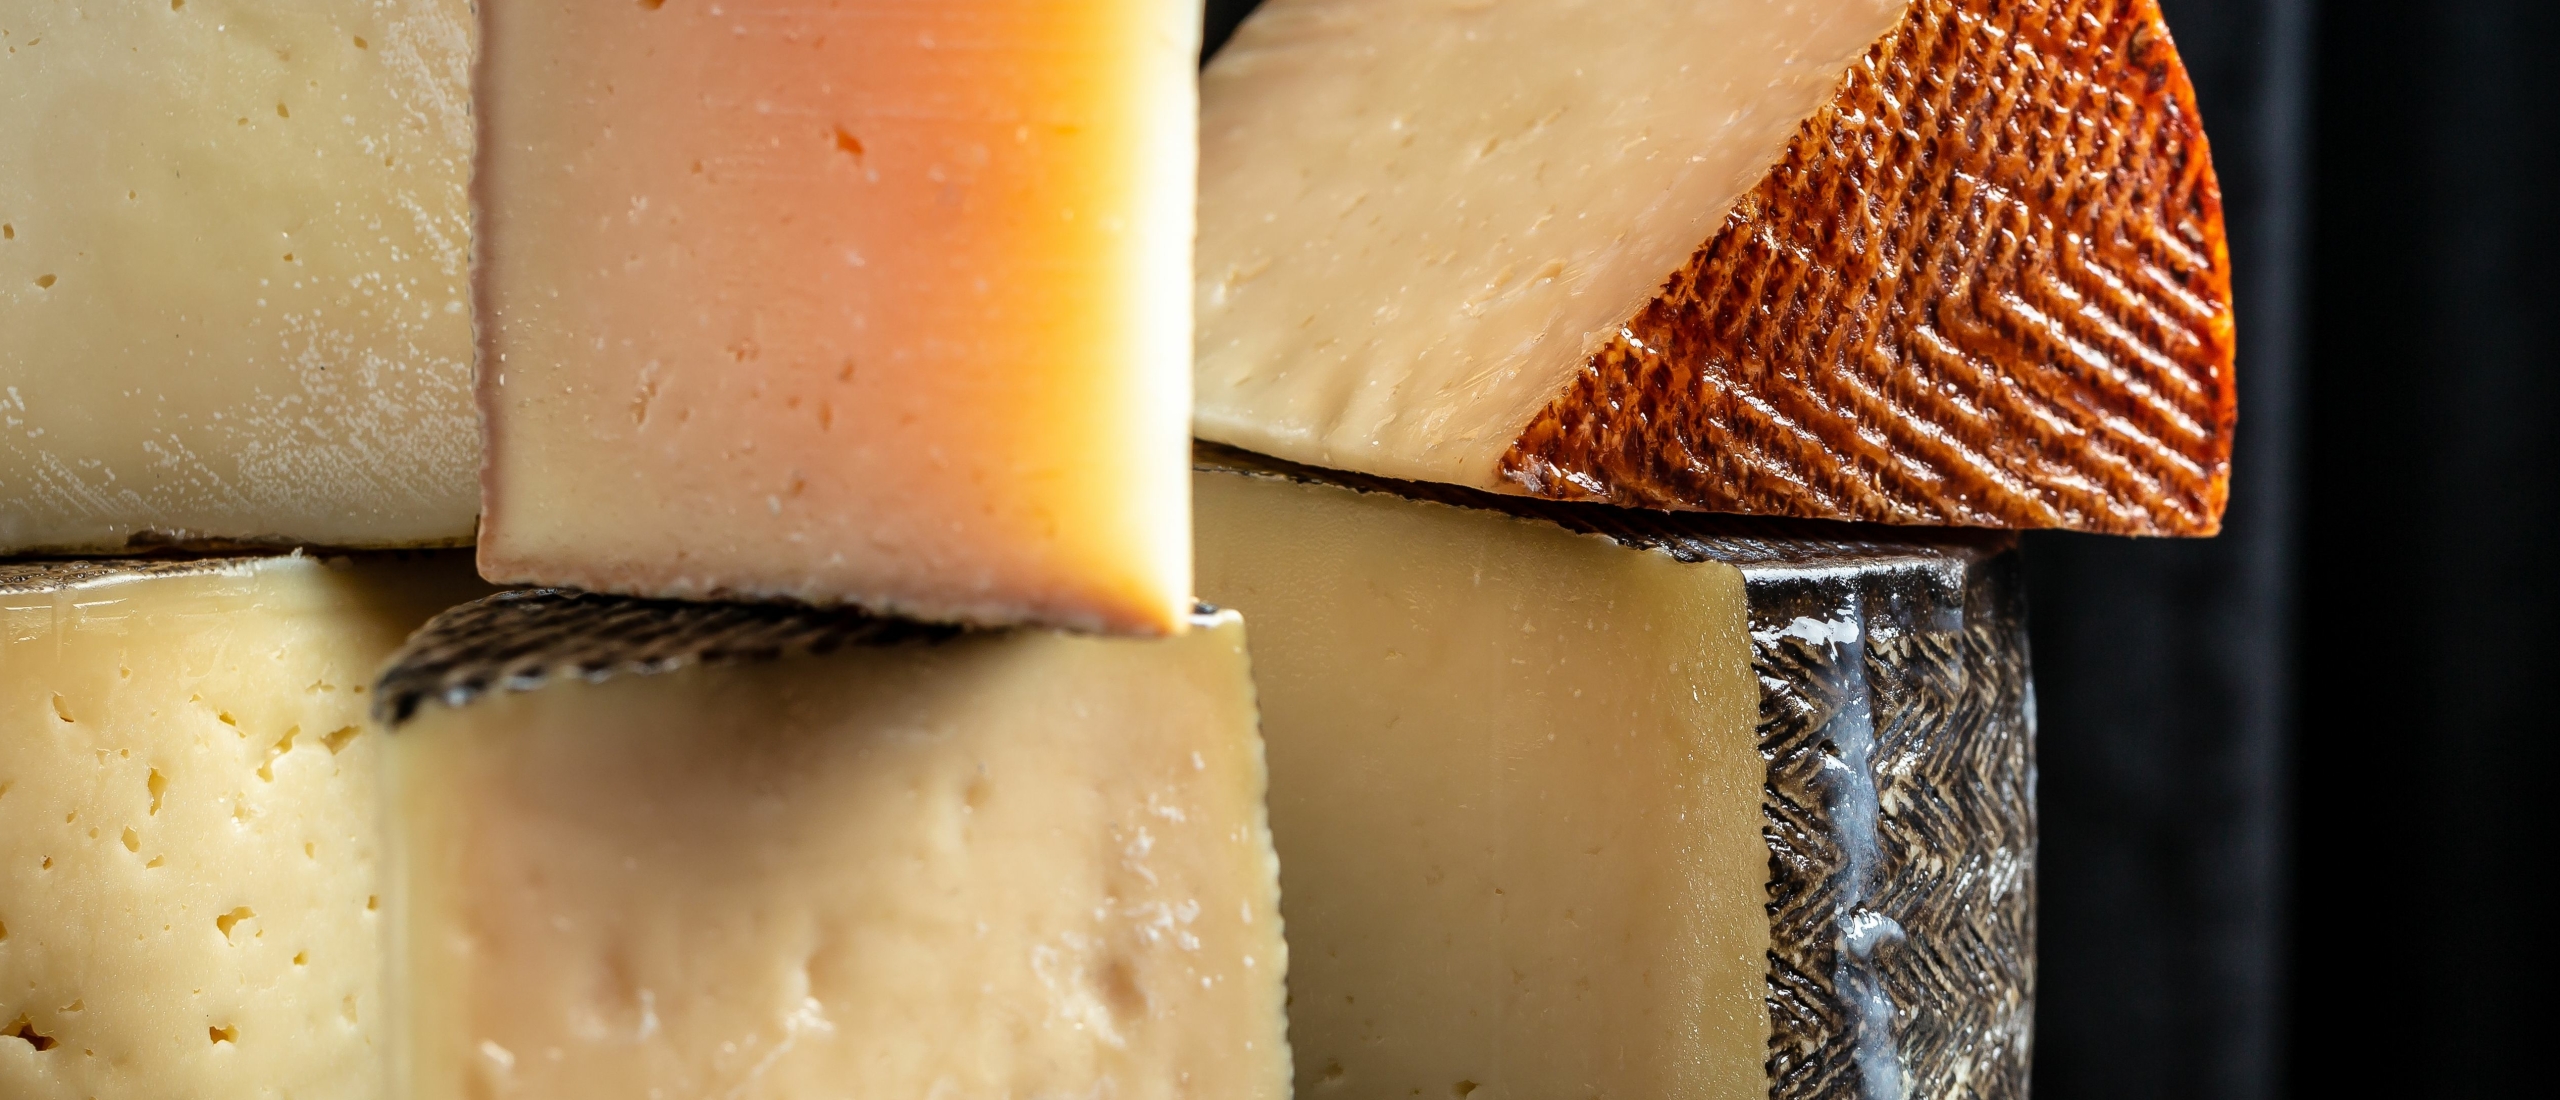 Maak kennis met de vele soorten kaas uit Spanje